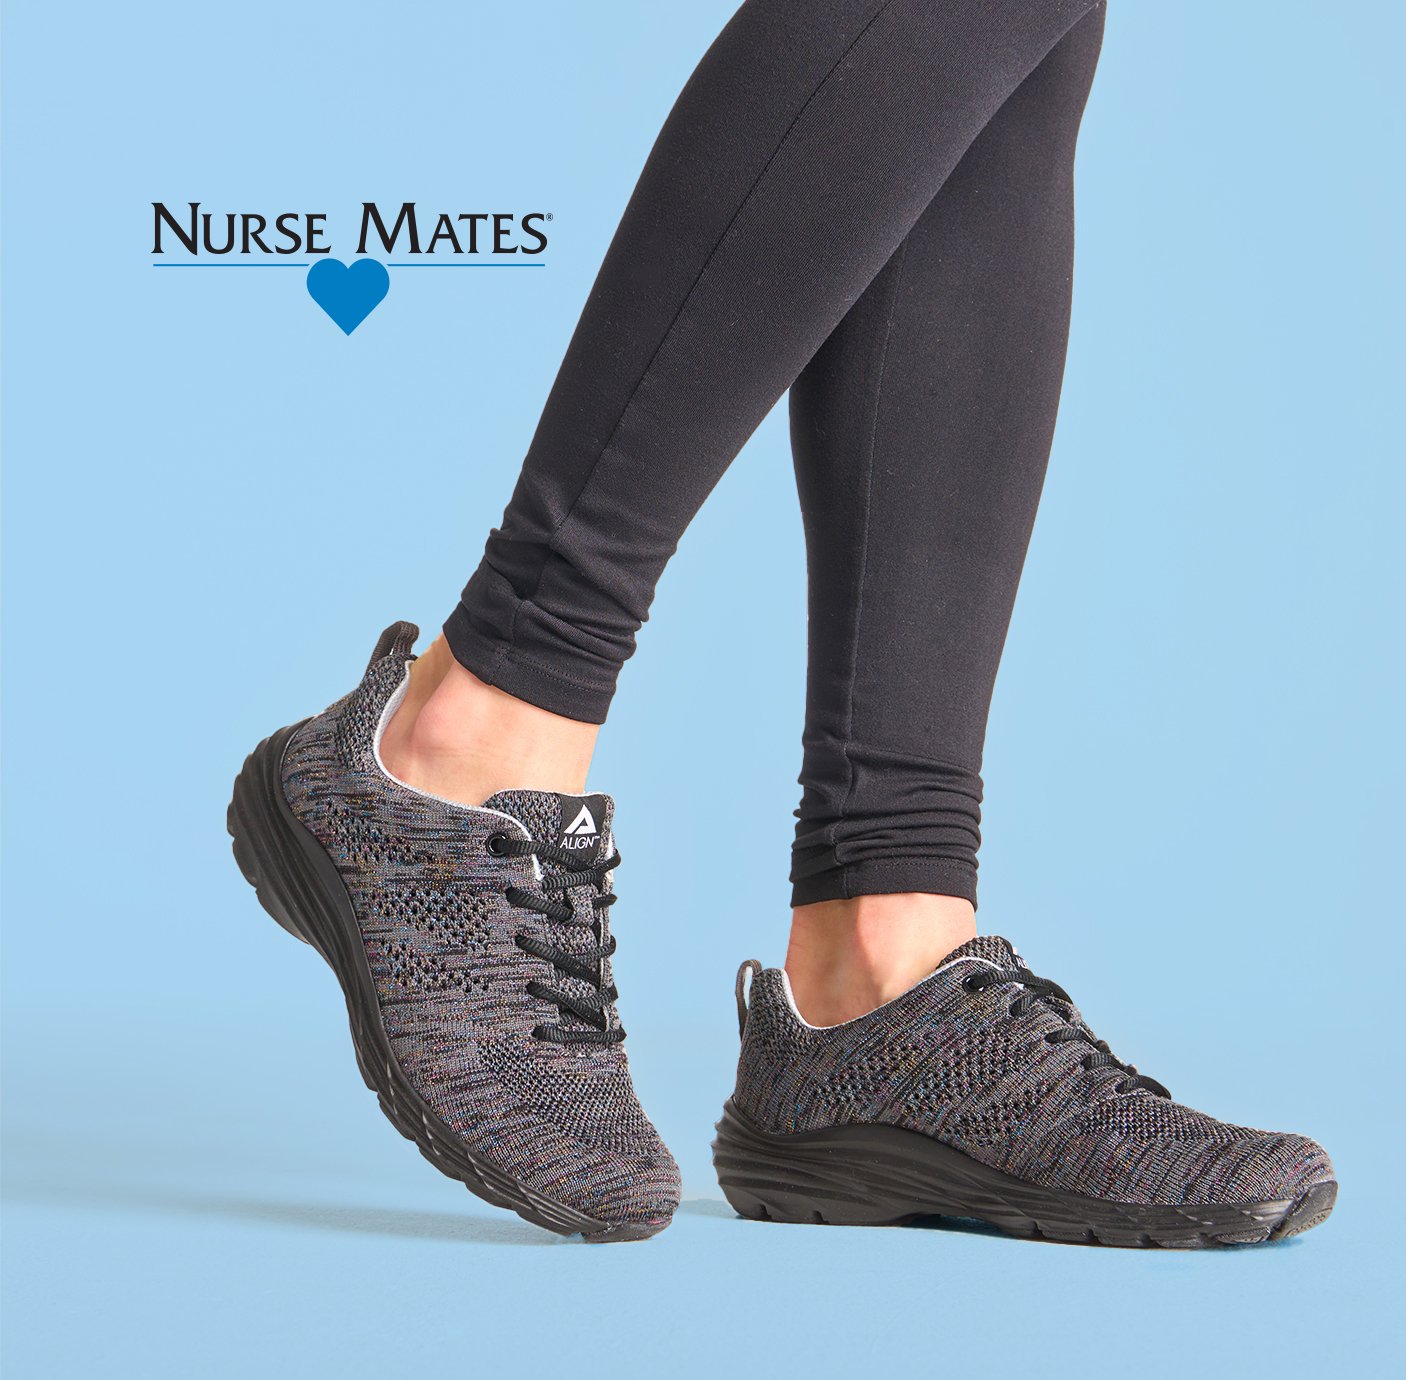 Viewing Nurse Mates Shoes & Accessories